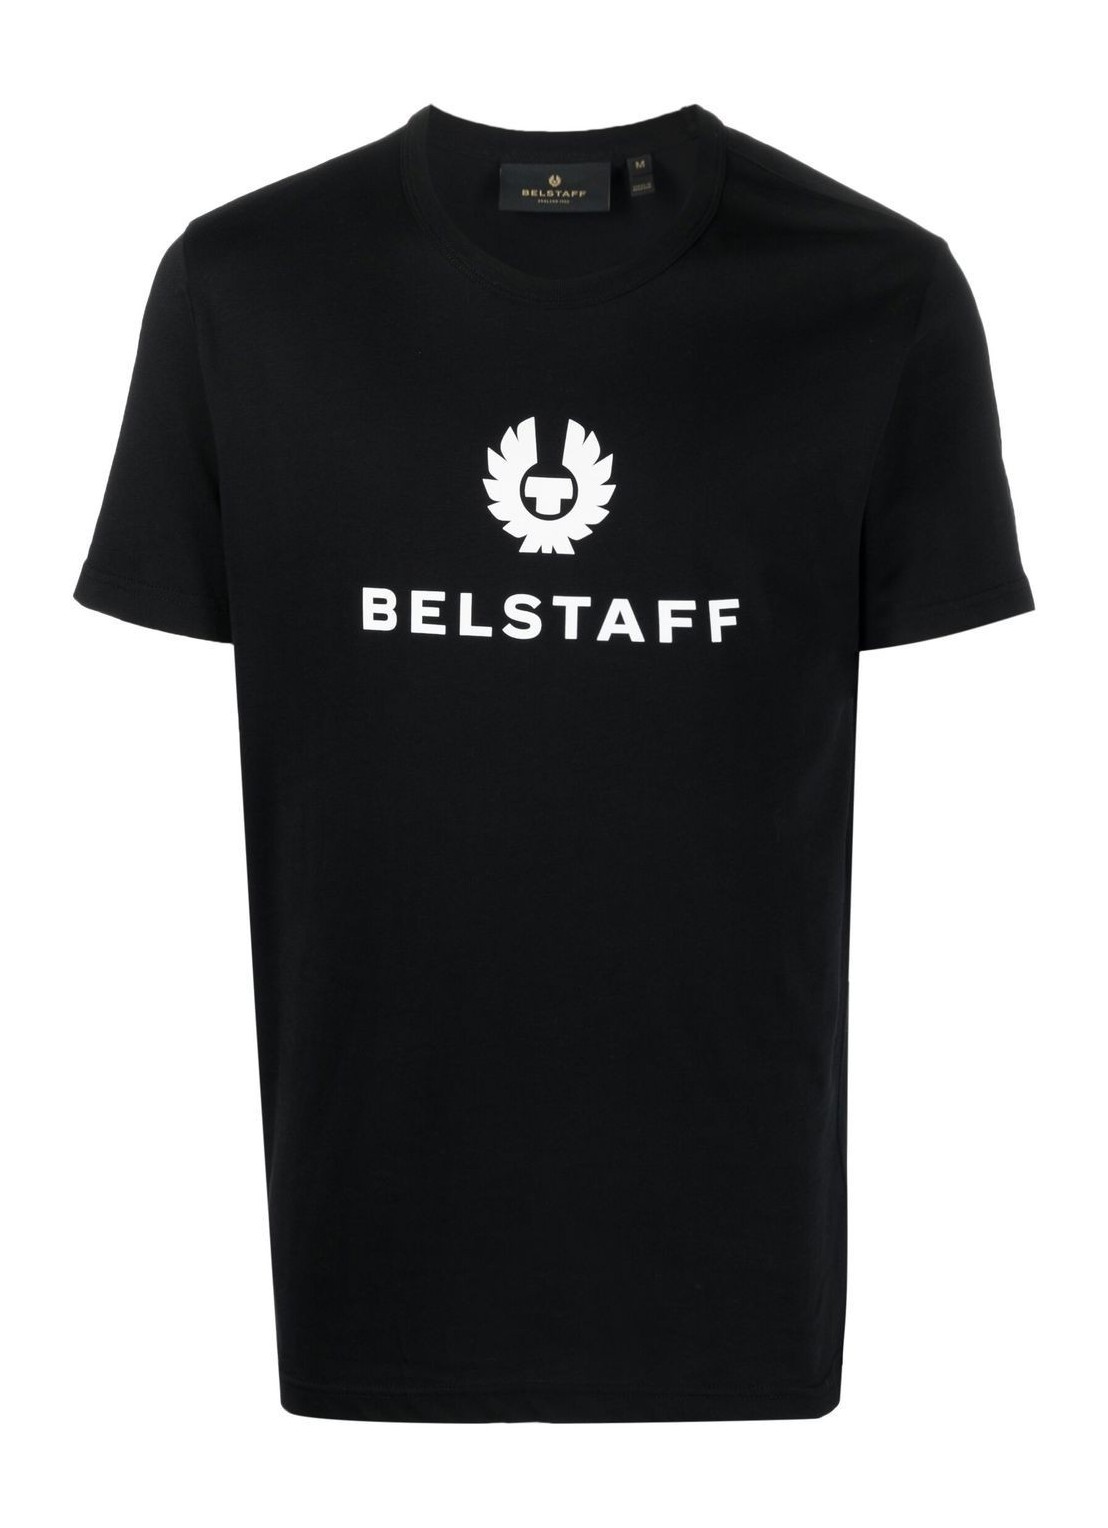 Camiseta belstaff t-shirt man belstaff signature t-shirt 104141 black talla negro
 